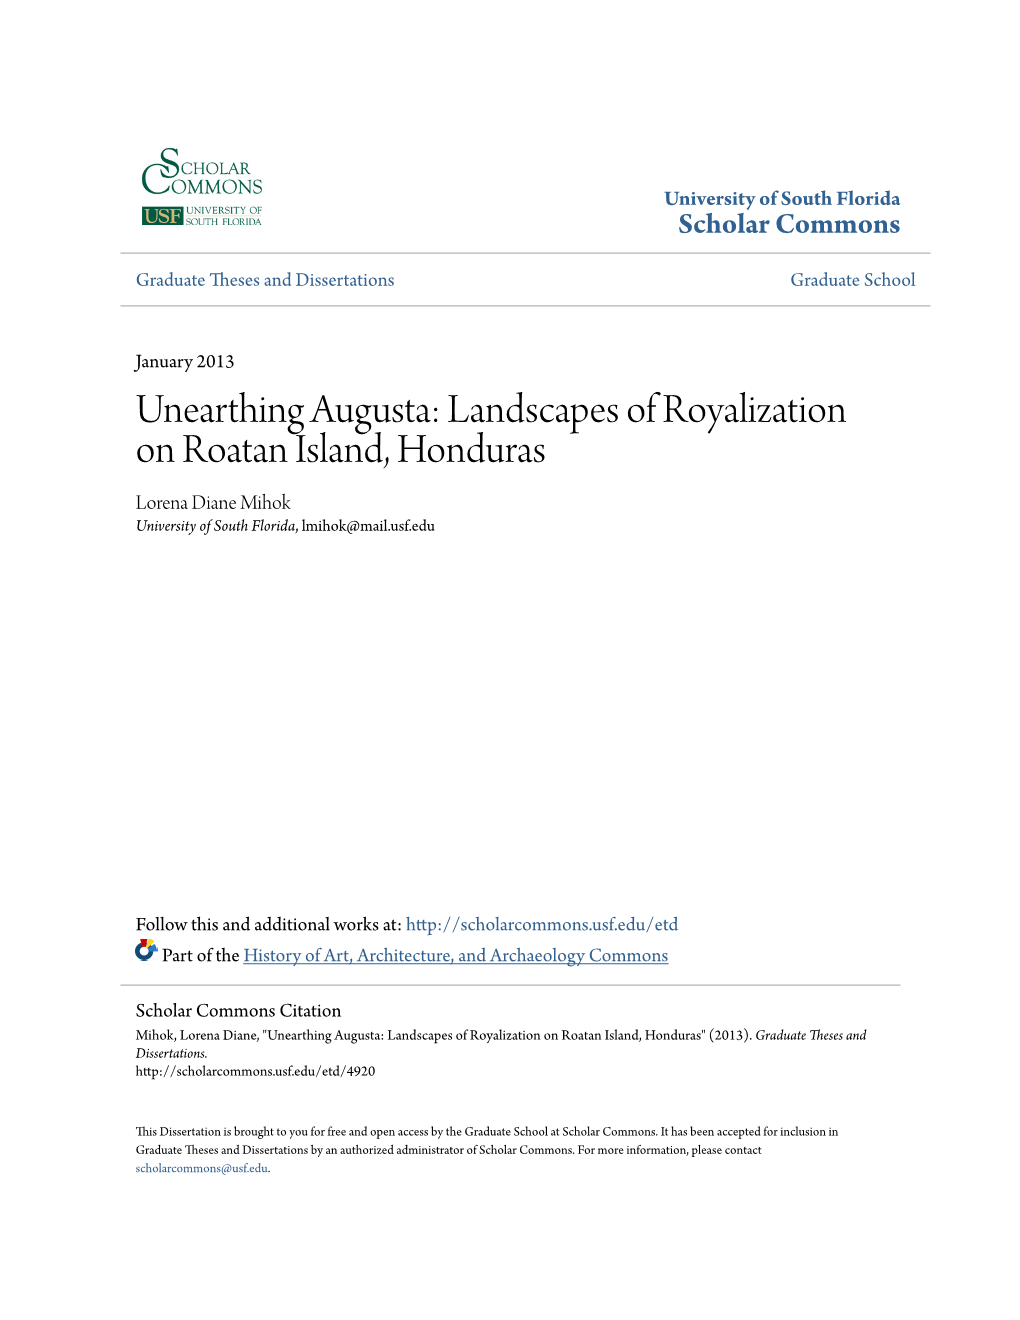 Landscapes of Royalization on Roatan Island, Honduras Lorena Diane Mihok University of South Florida, Lmihok@Mail.Usf.Edu